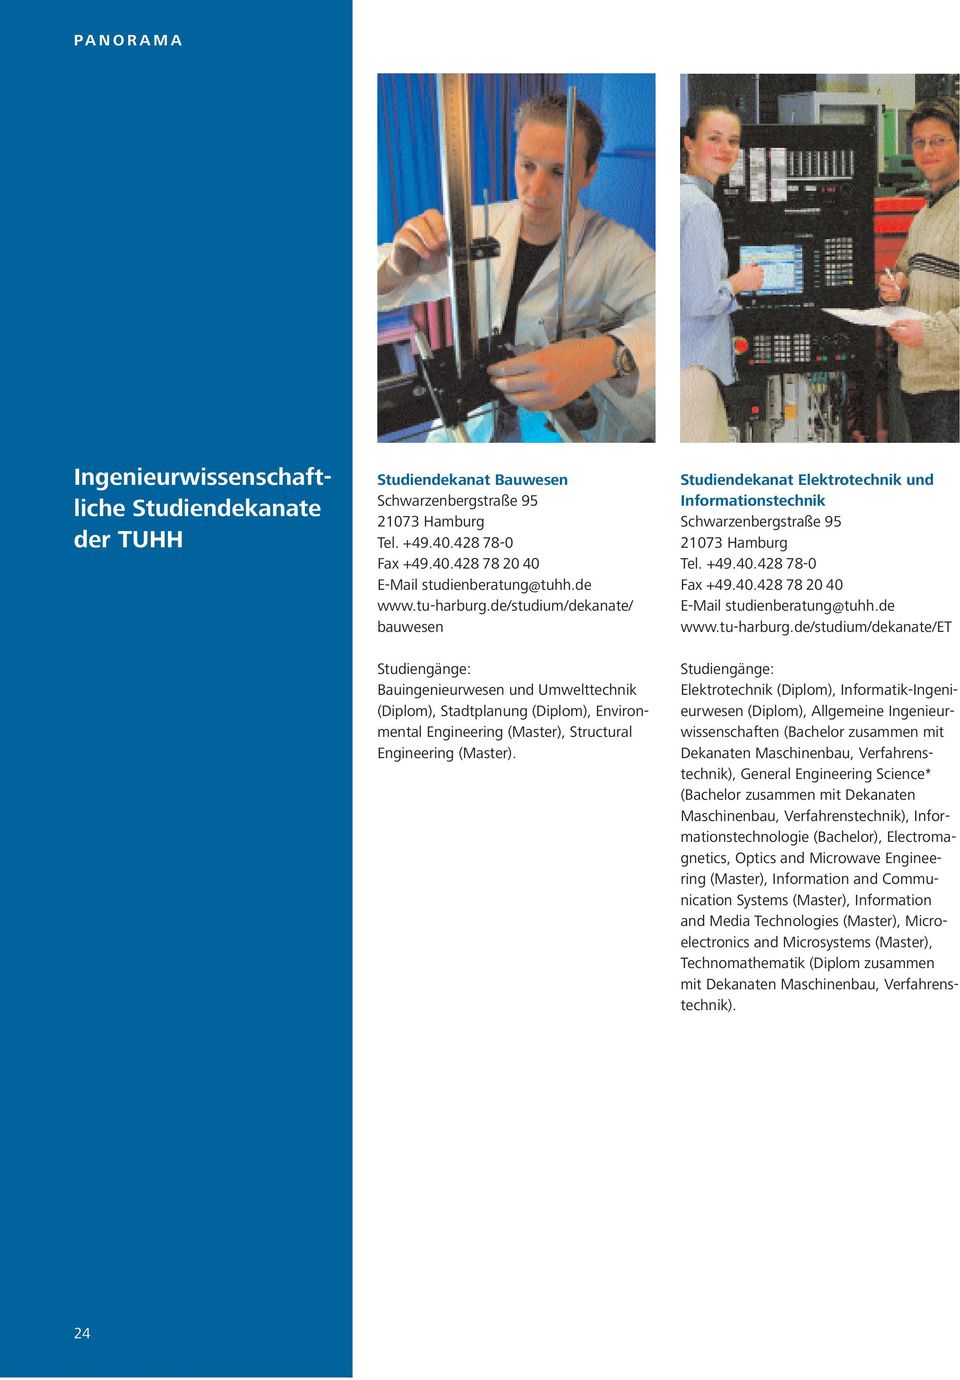 Studiendekanat Elektrotechnik und Informationstechnik www.tu-harburg.